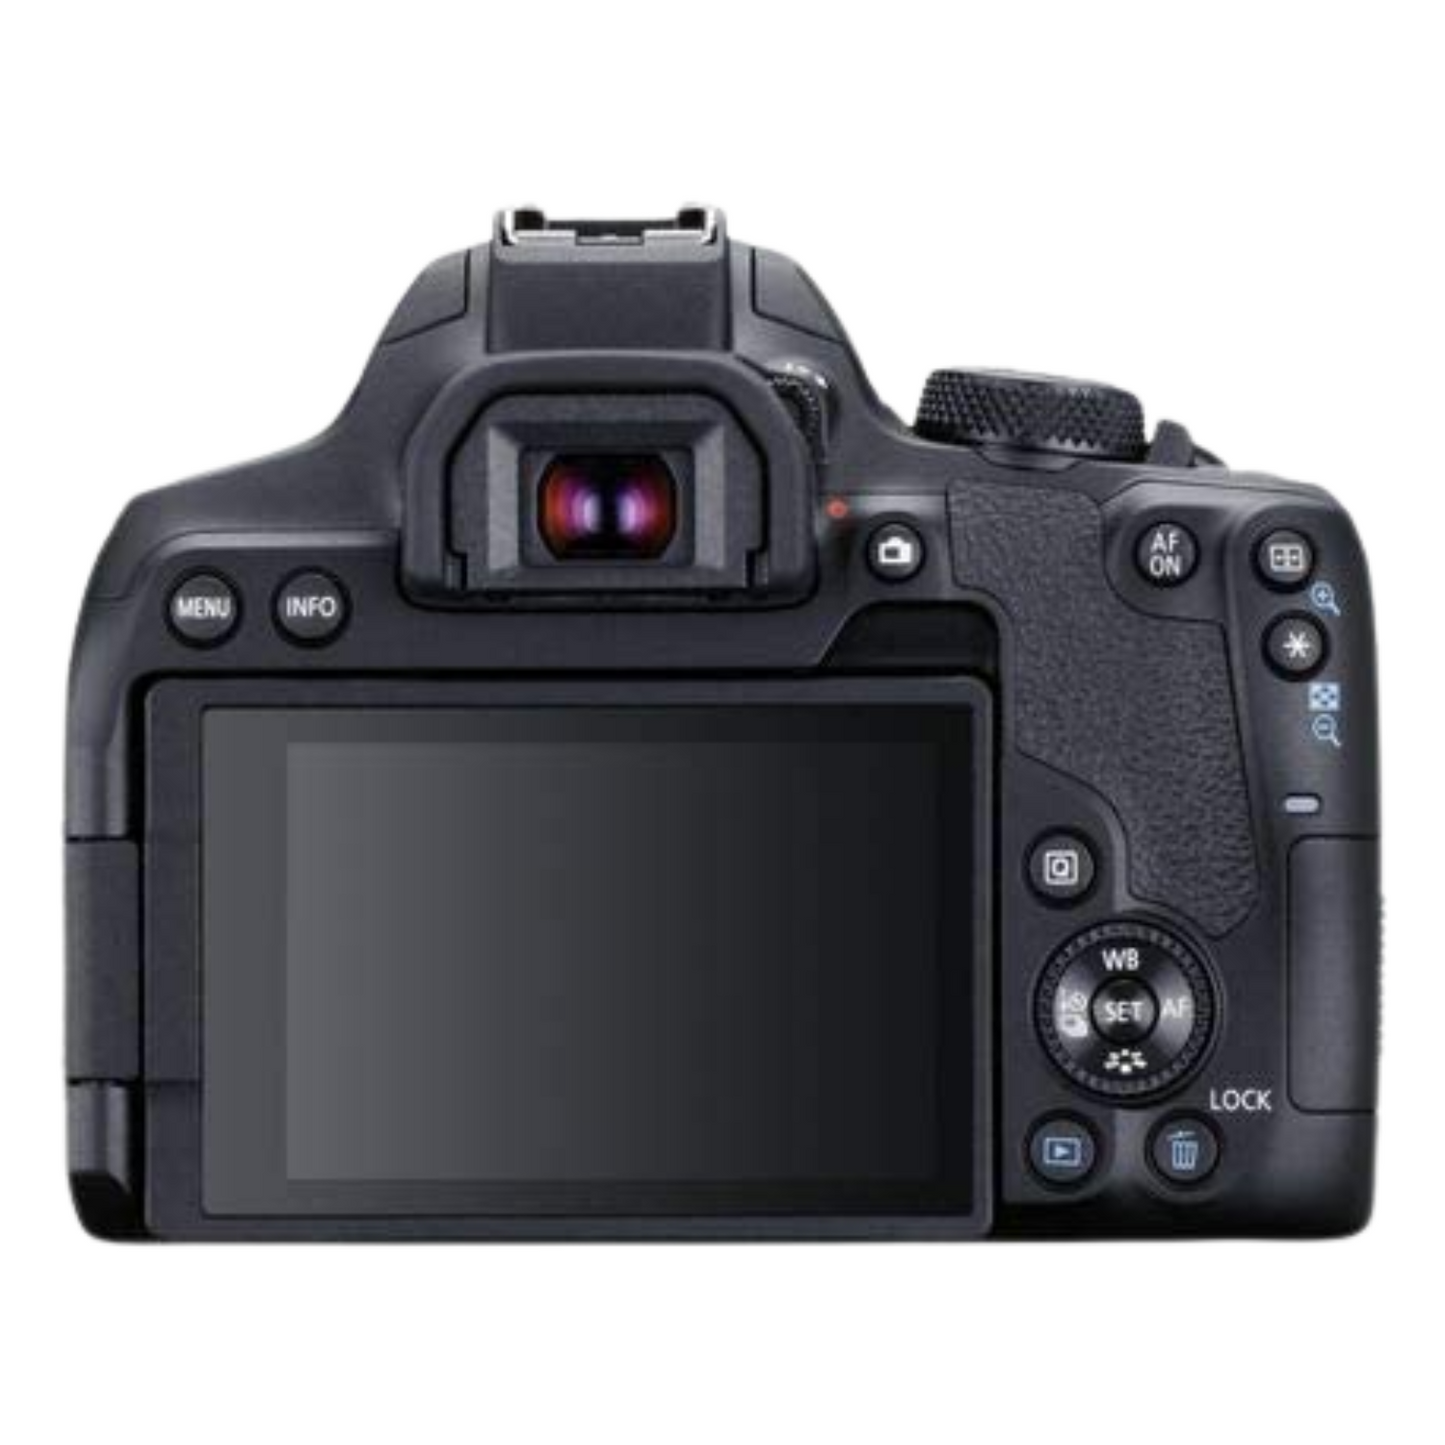 Canon EOS 850D DSLR Camera with 18-55mm Lens Kit, Black